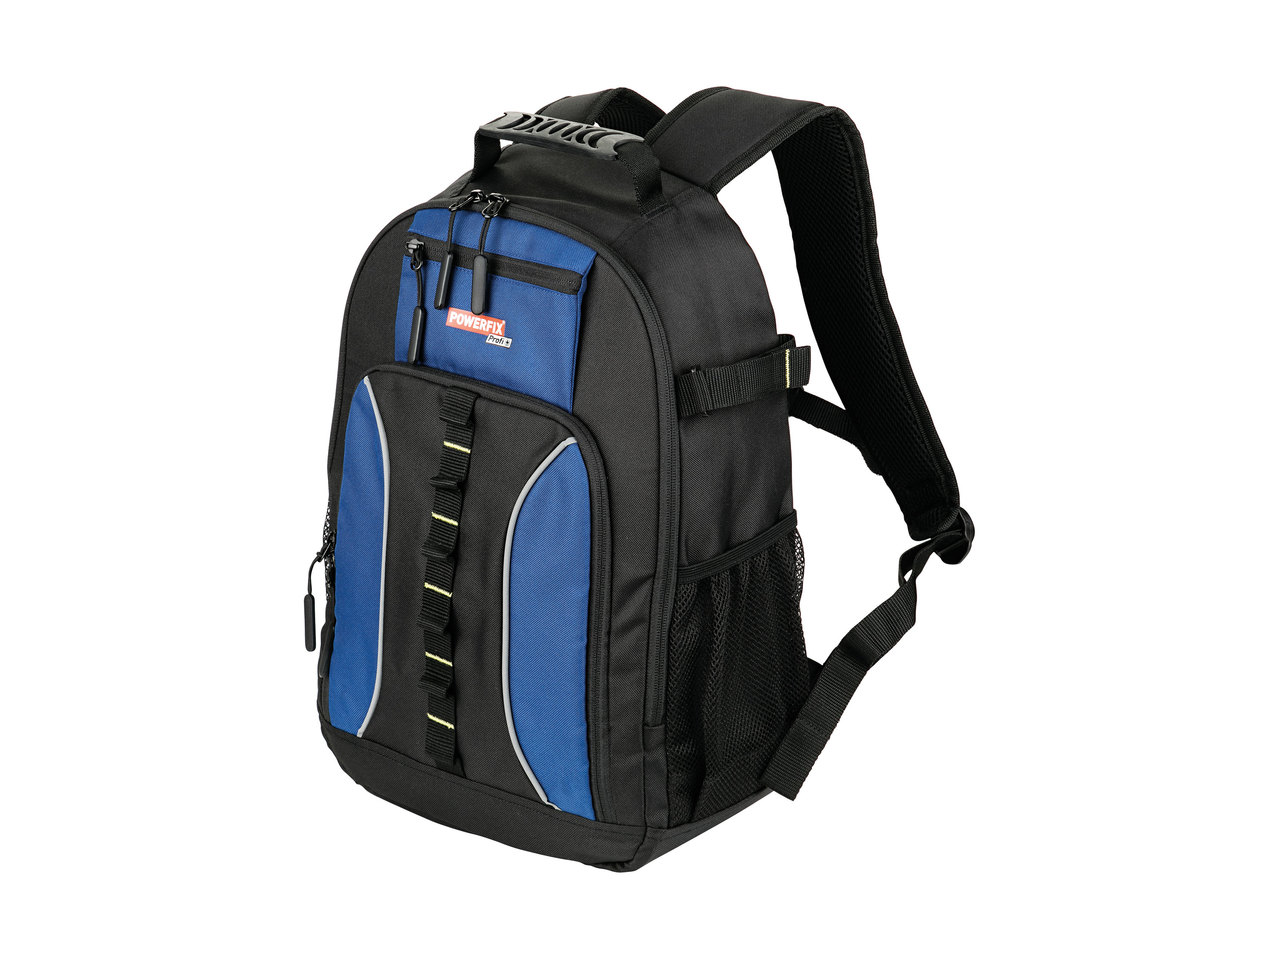 Powerfix Profi Tool Backpack1